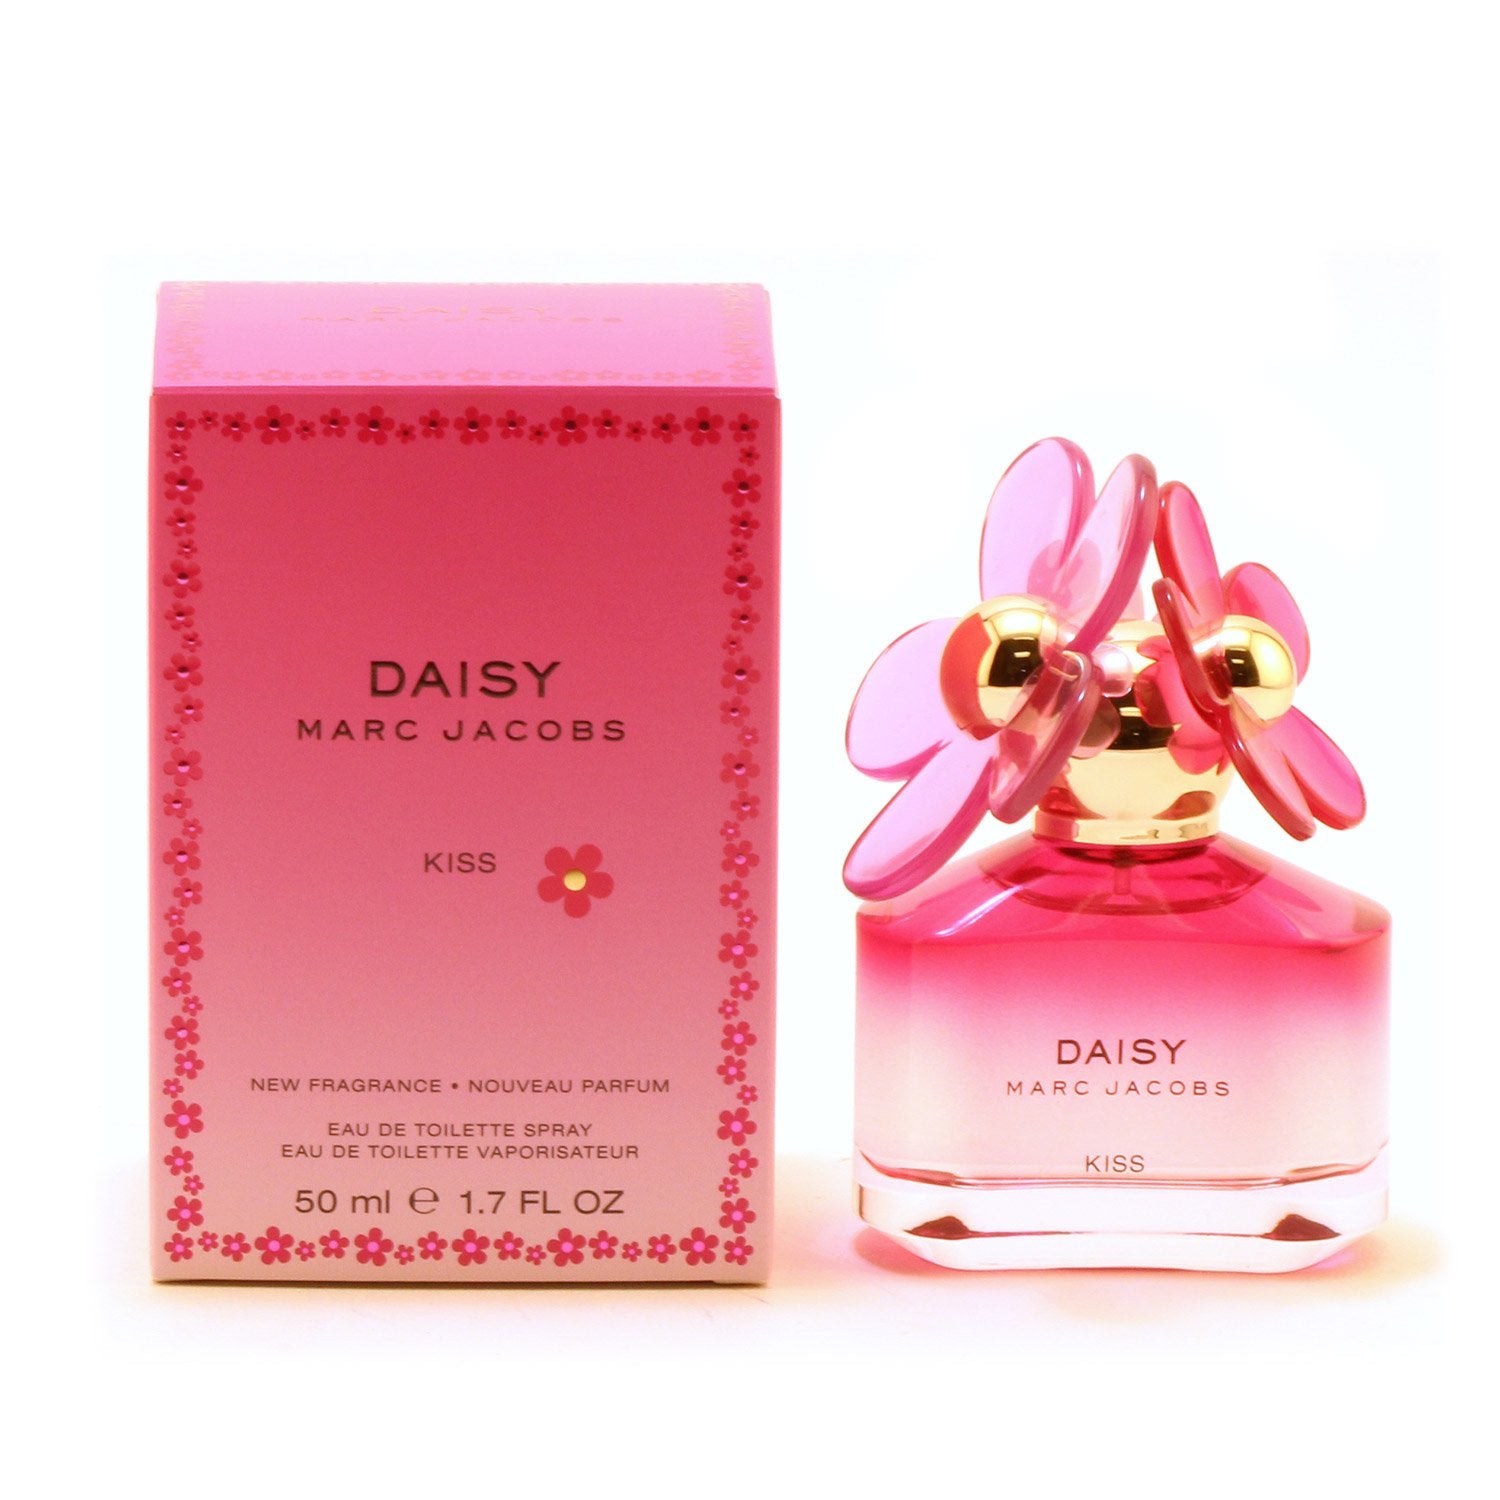 Perfume - MARC JACOBS DAISY KISS FOR WOMEN - EAU DE TOILETTE SPRAY, 1.7 OZ